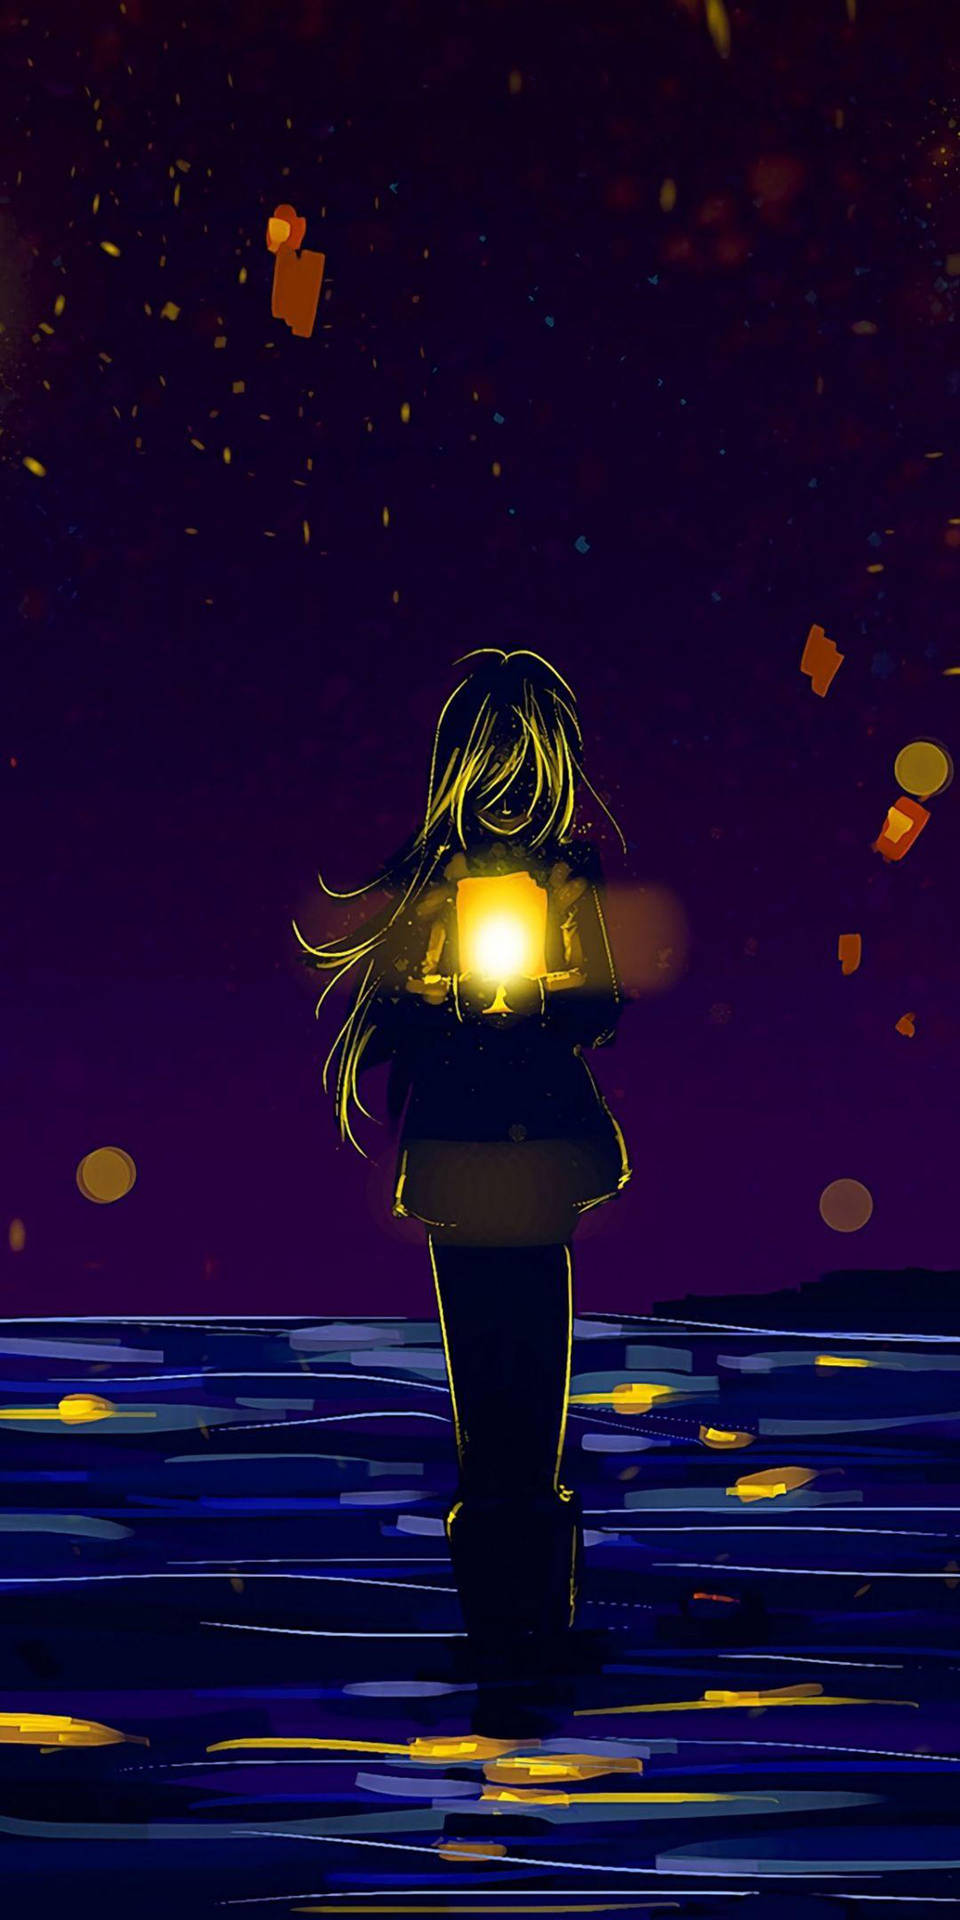 Sad Drawing With Lantern Background